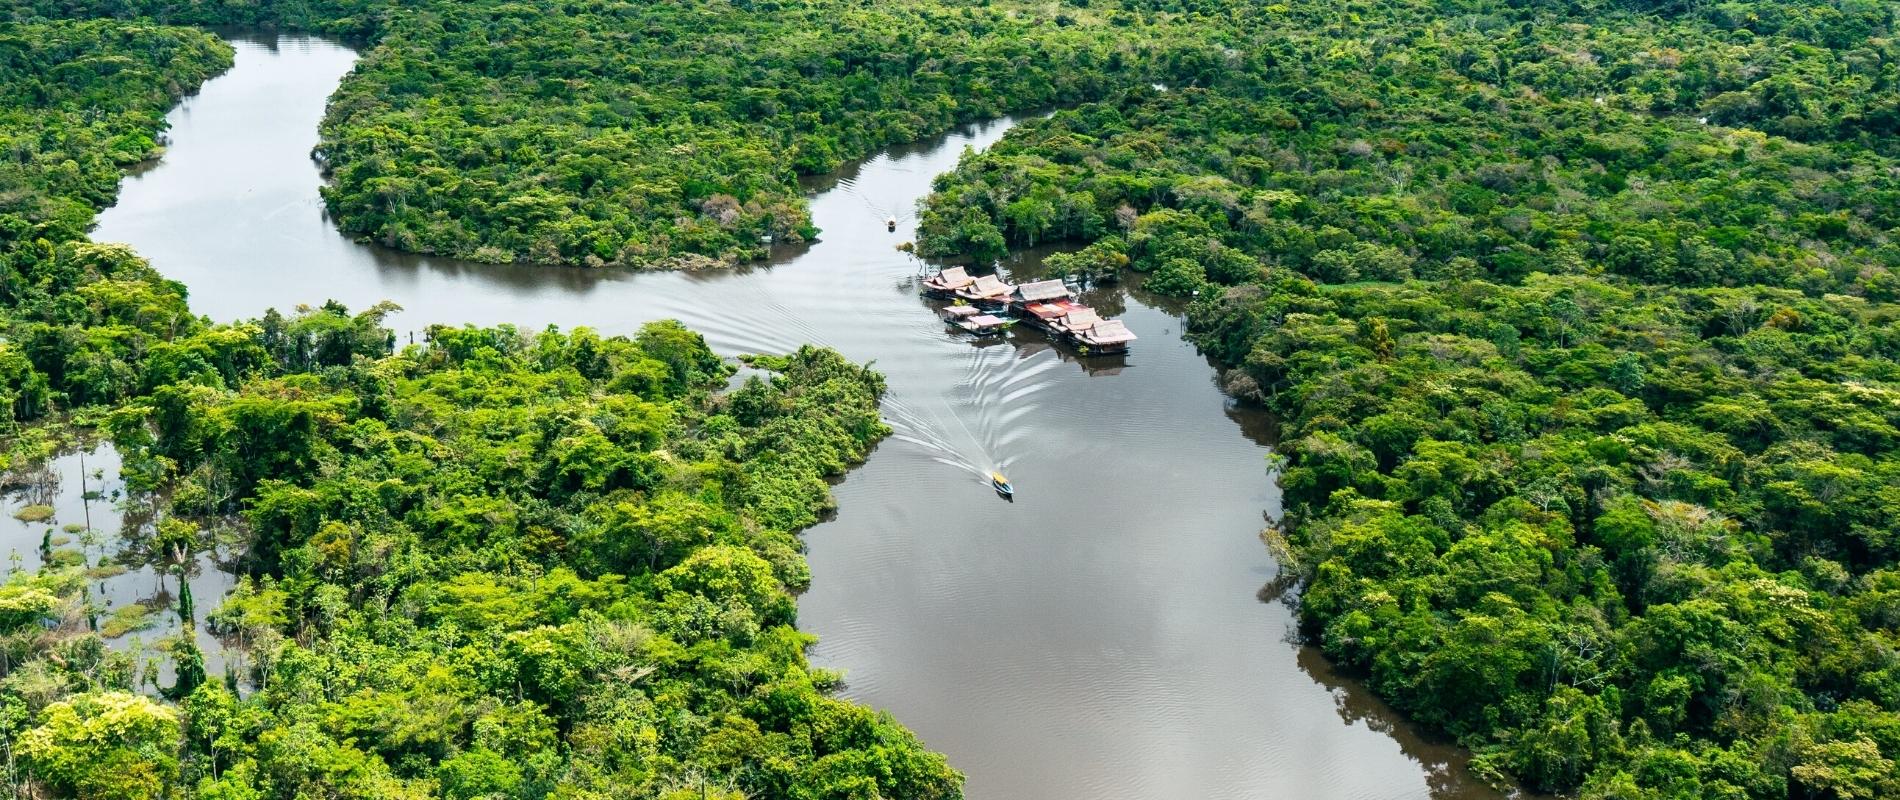 Tambopata Amazon Rainforest  4 Days